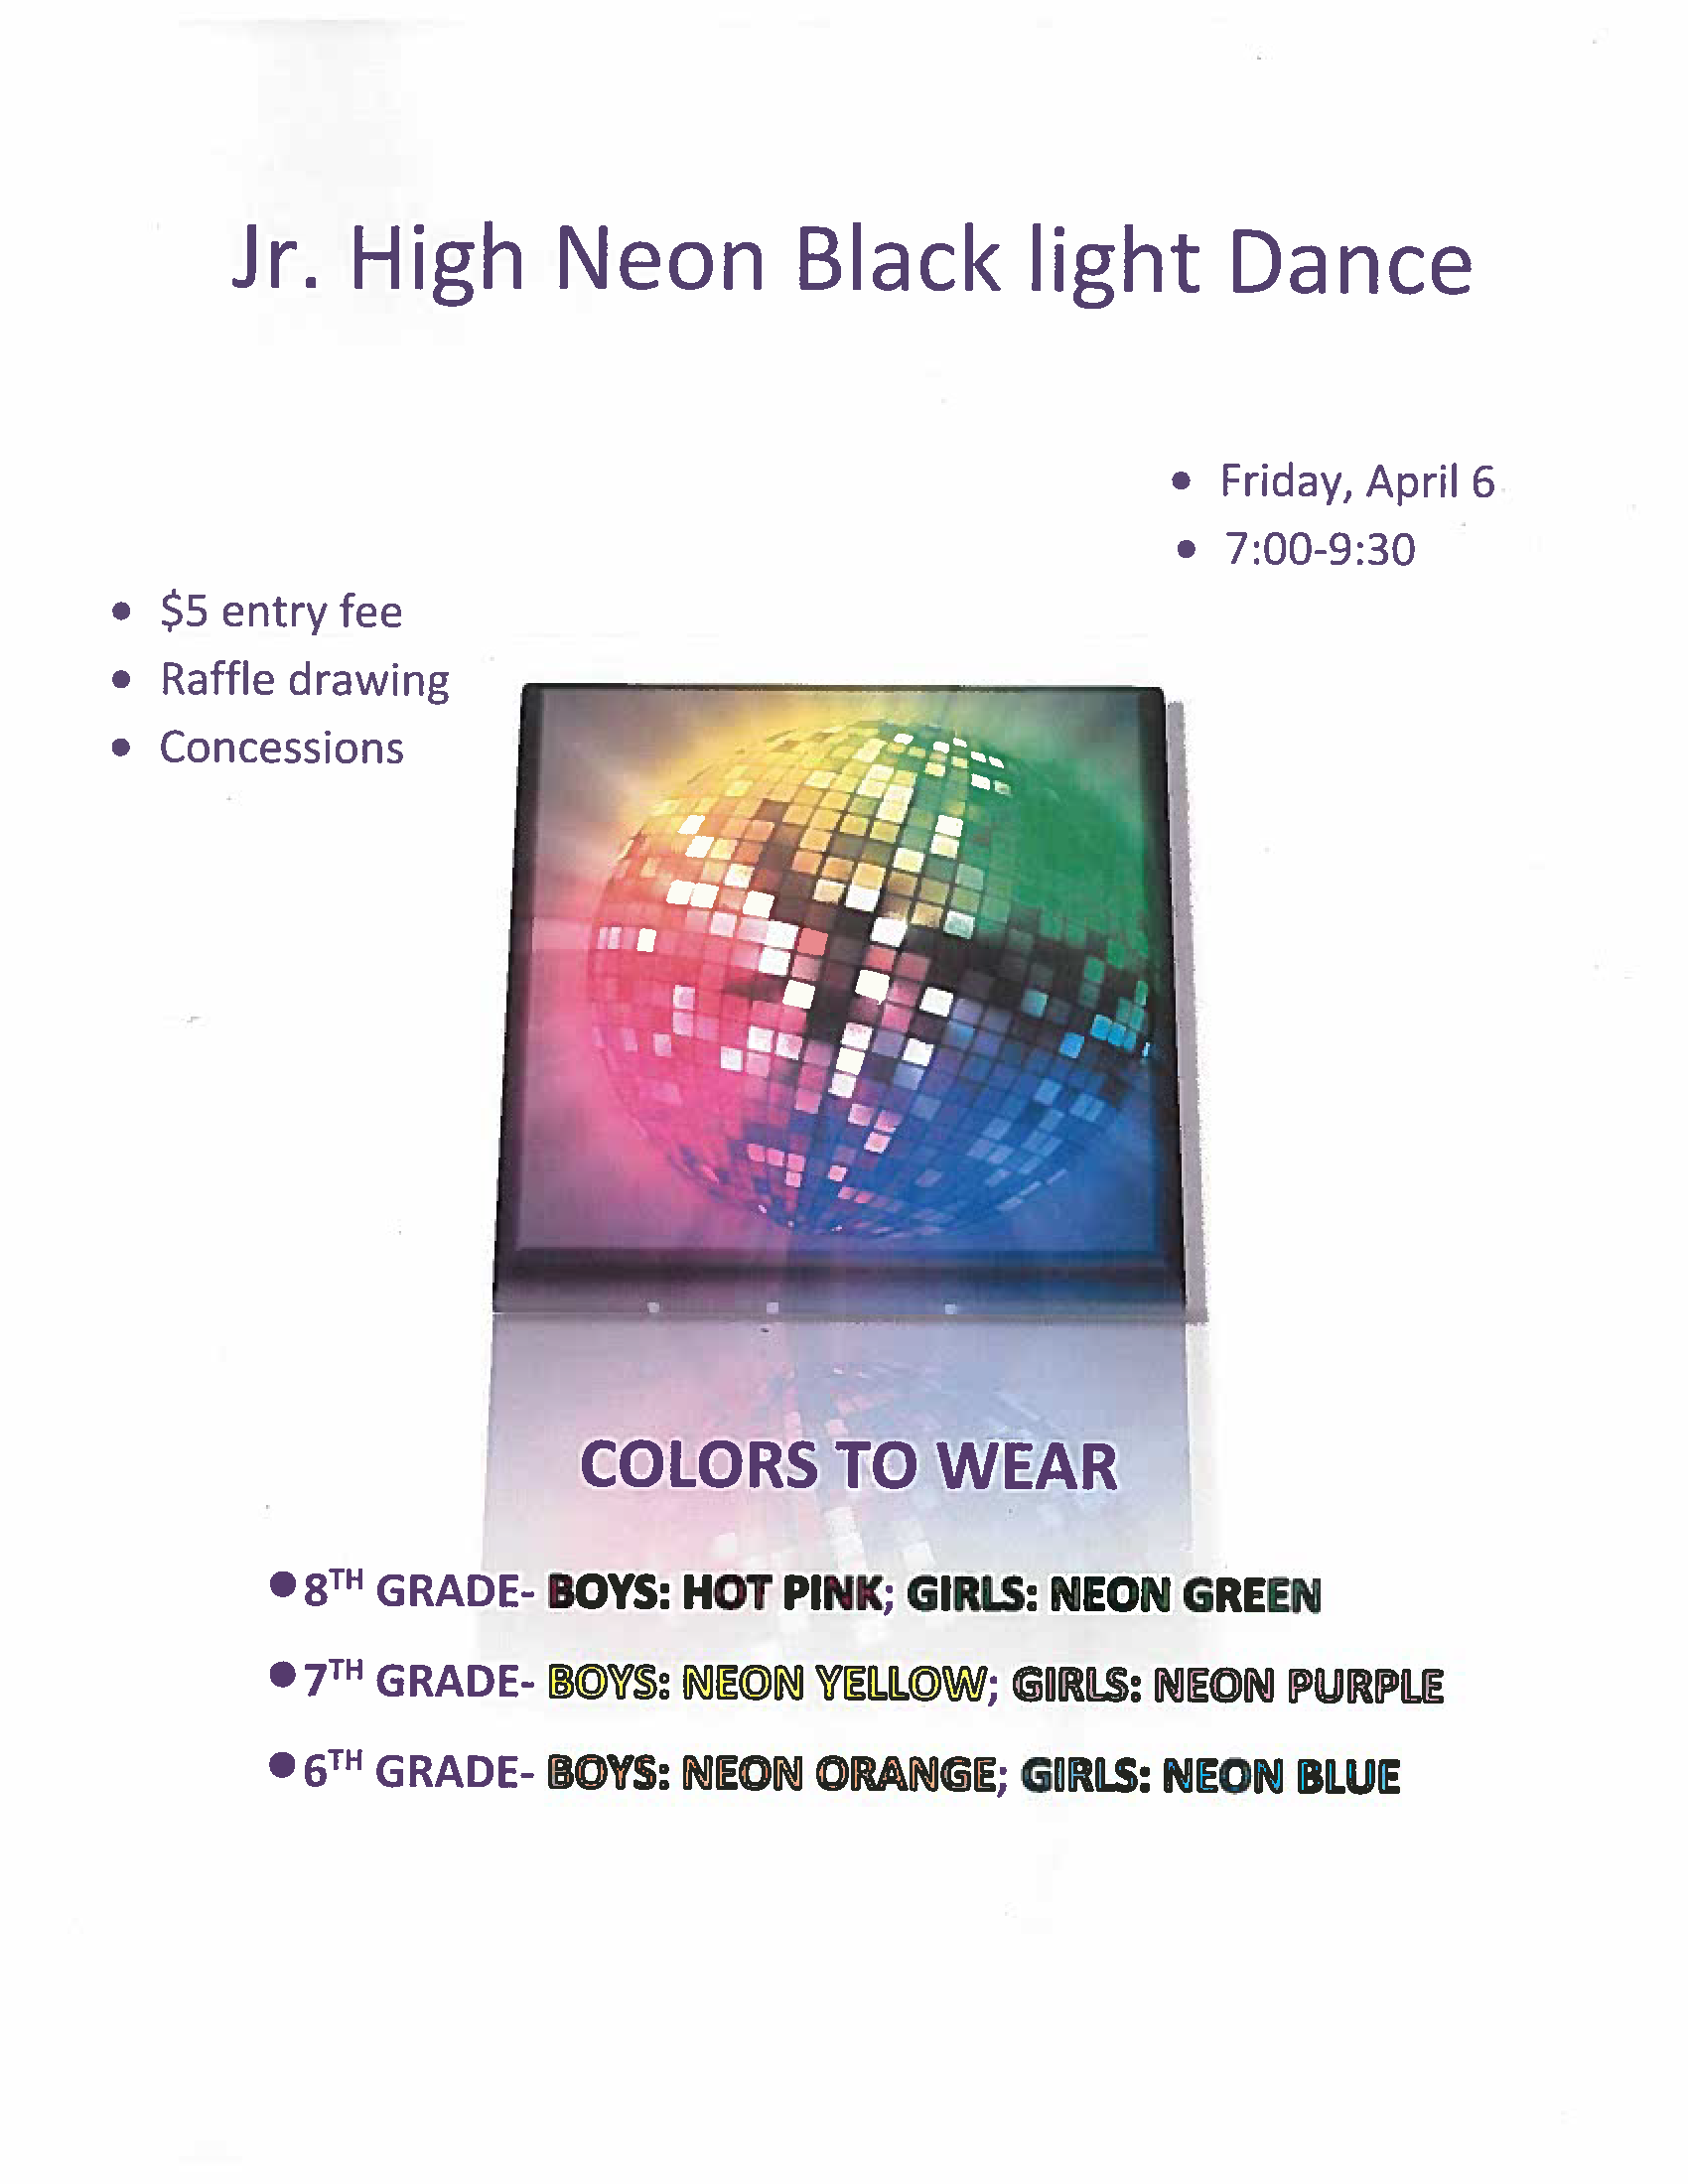 Junior High Neon Black Light Dance